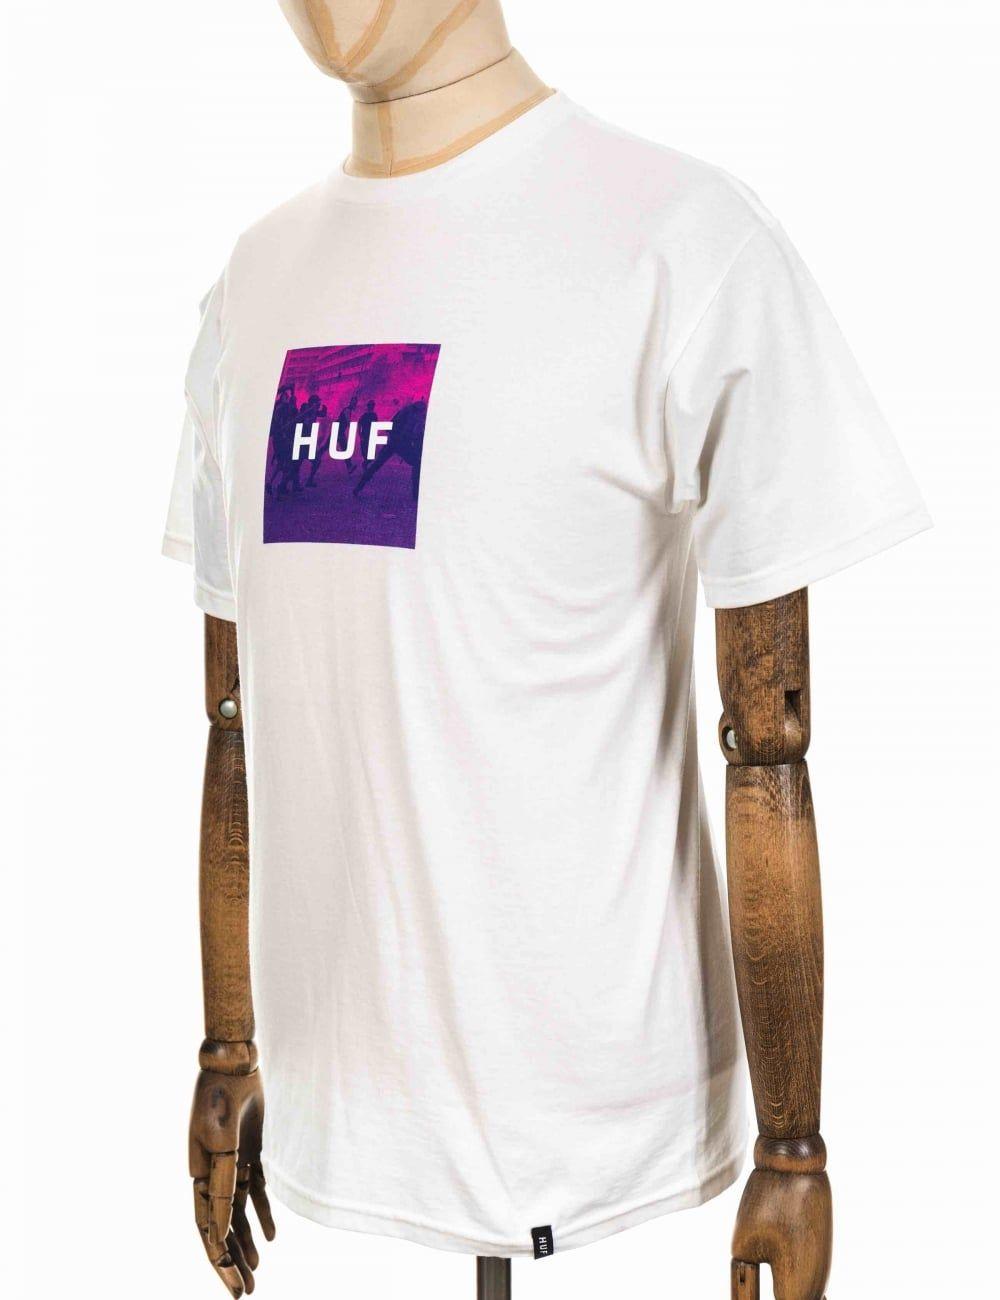 Brown and White Box Logo - Huf Riot Box Logo Tee - White - Huf from iConsume UK